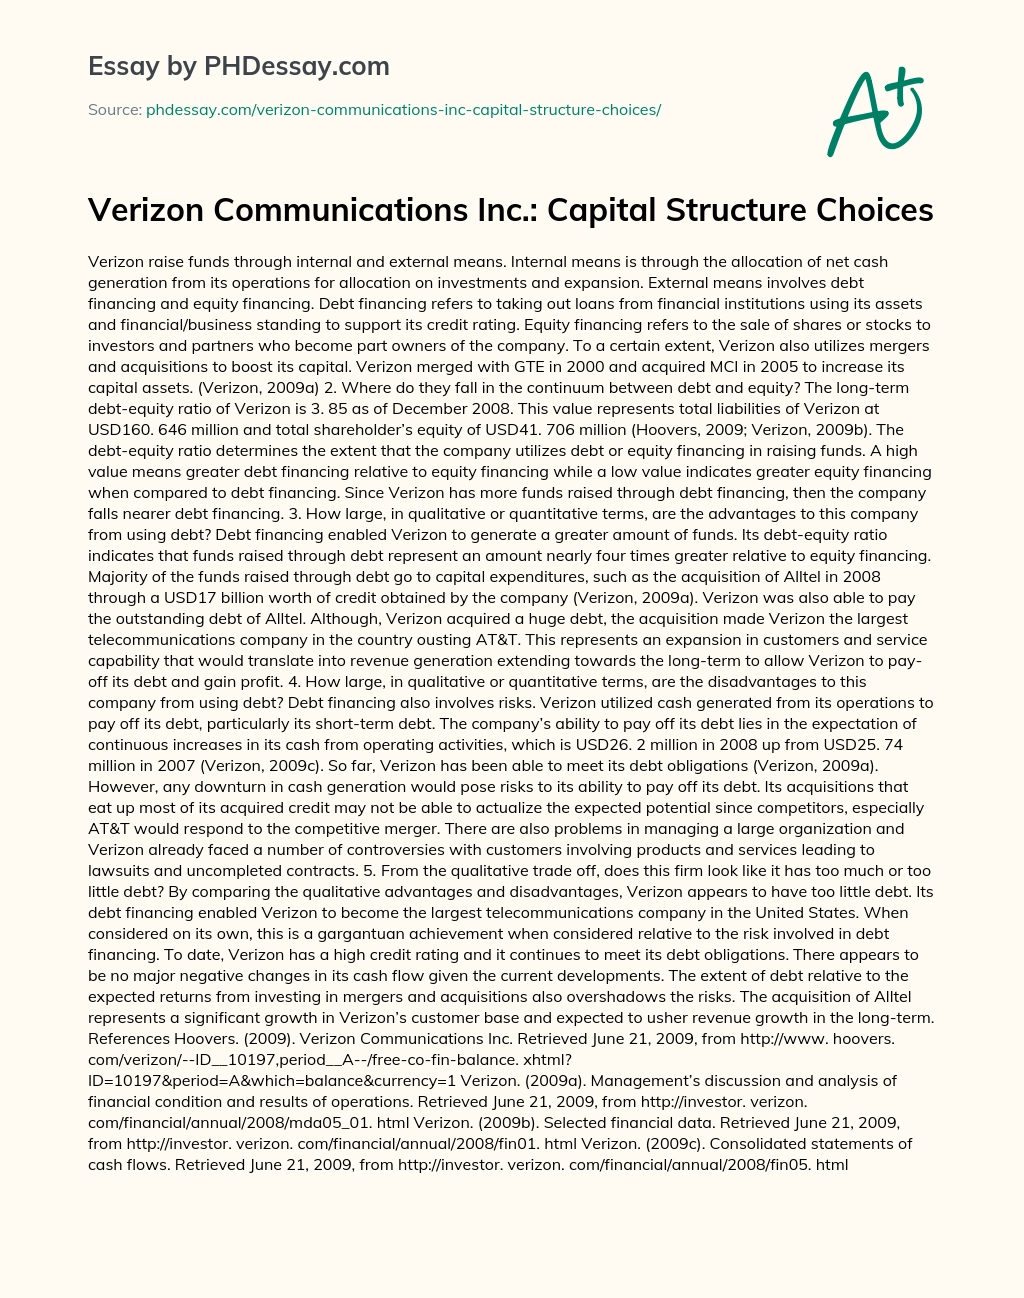 Verizon Communications Inc.: Capital Structure Choices essay